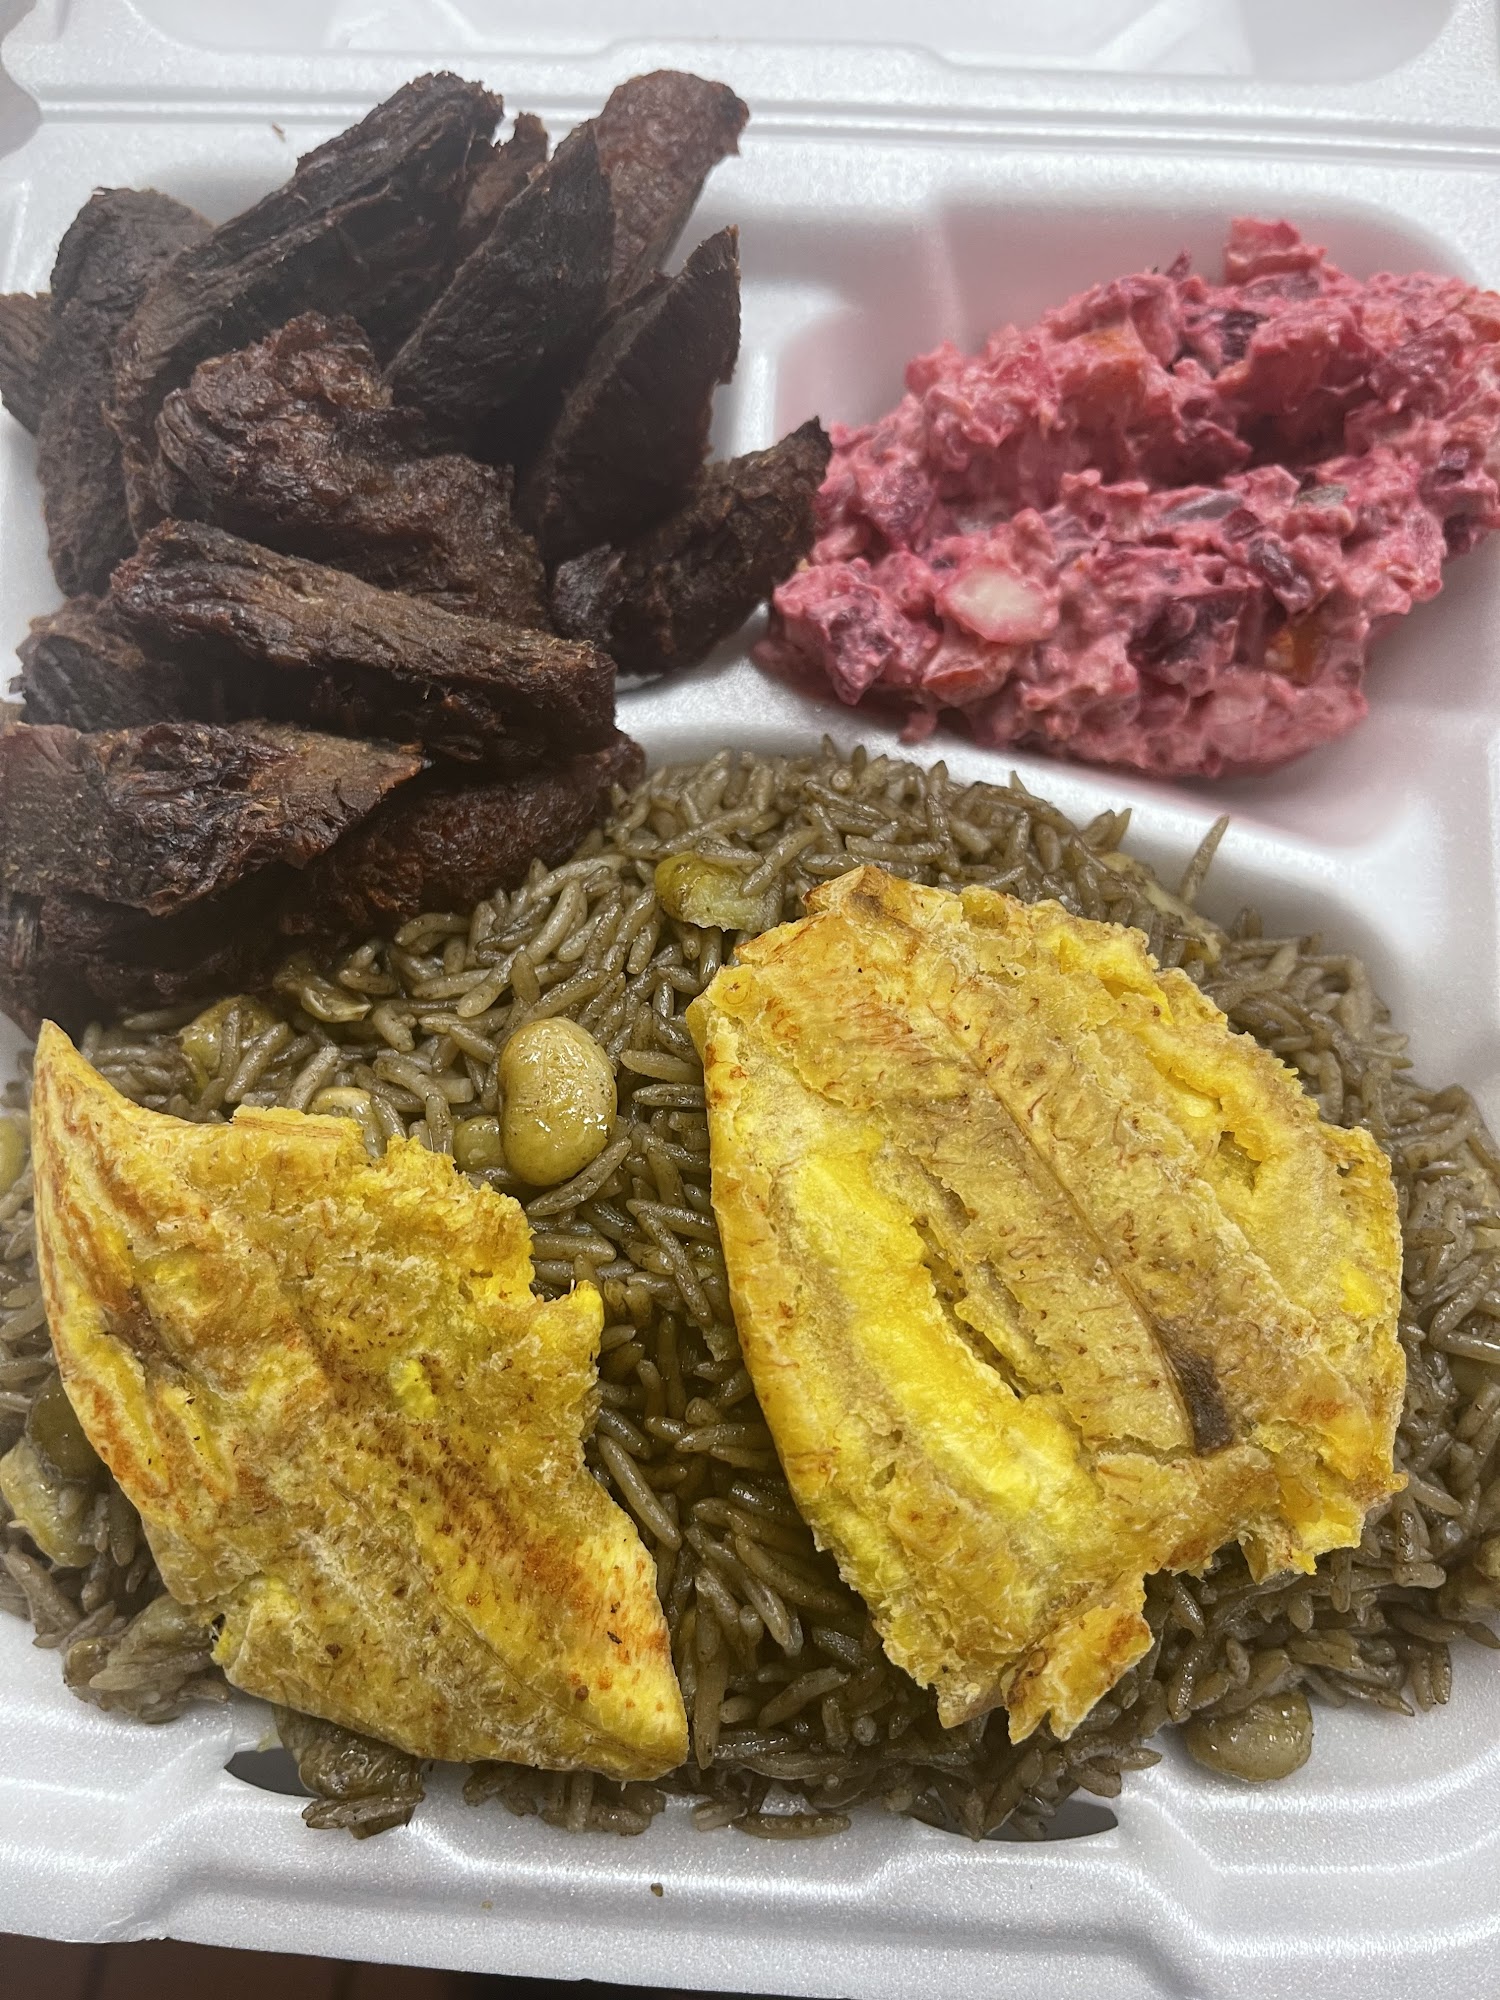 Creole Fusion Cuisine